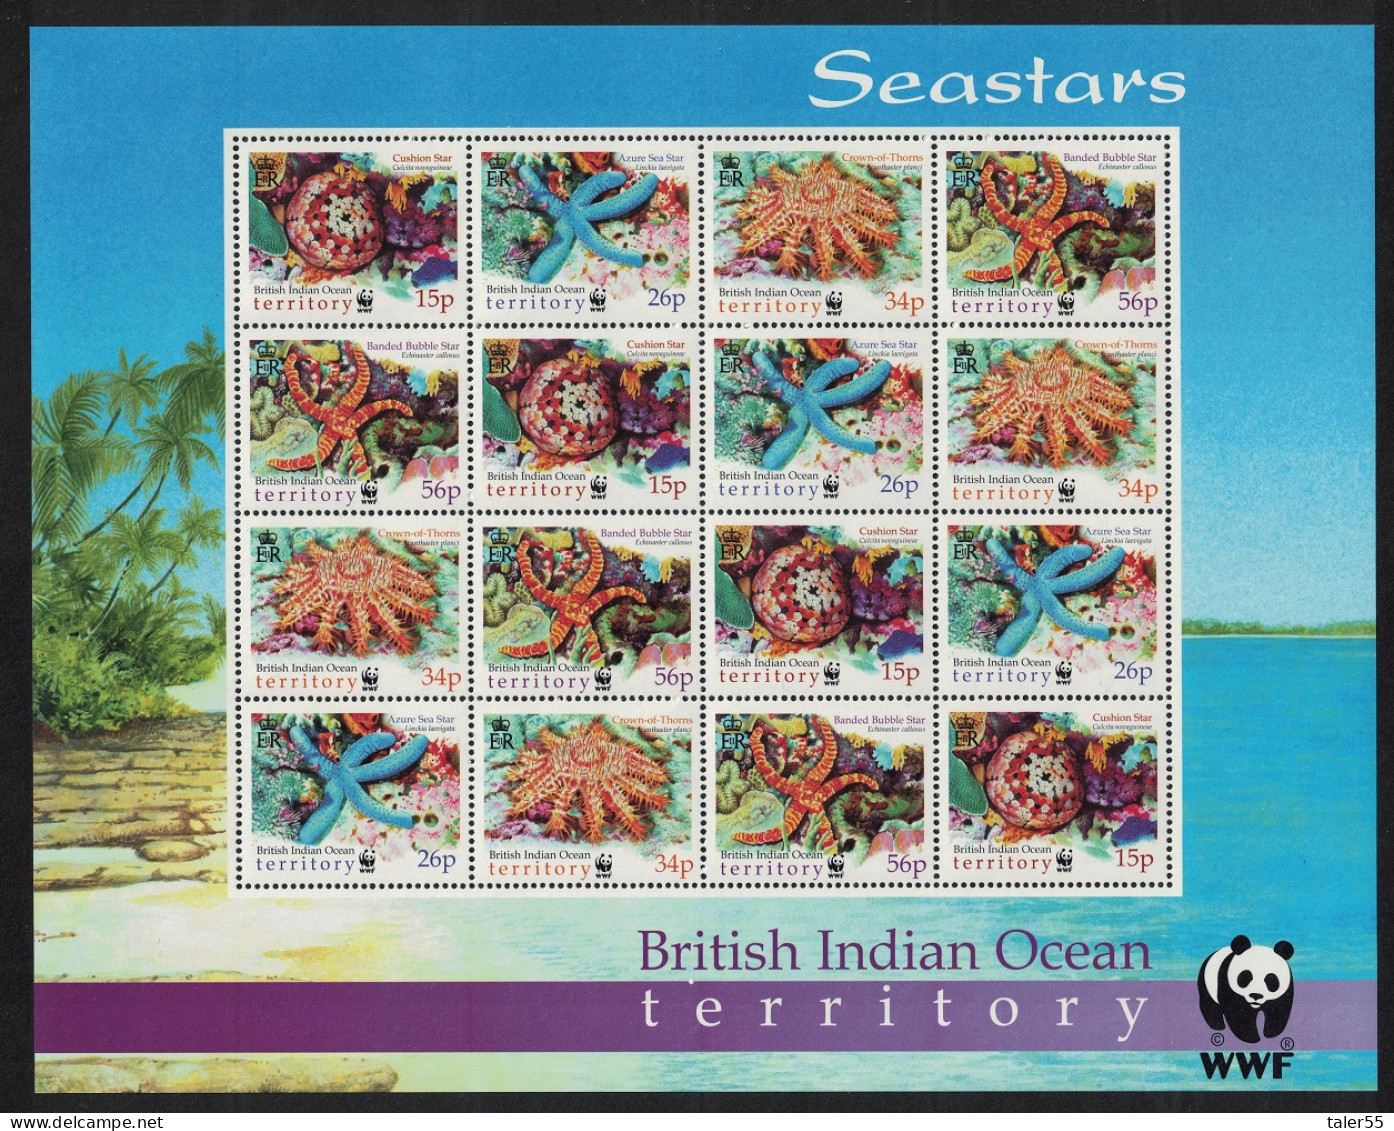 BIOT WWF Sea Stars Sheetlet Of 4 Sets 2001 MNH SG#253-256 MI#266-269 Sc#231-234 - Territoire Britannique De L'Océan Indien